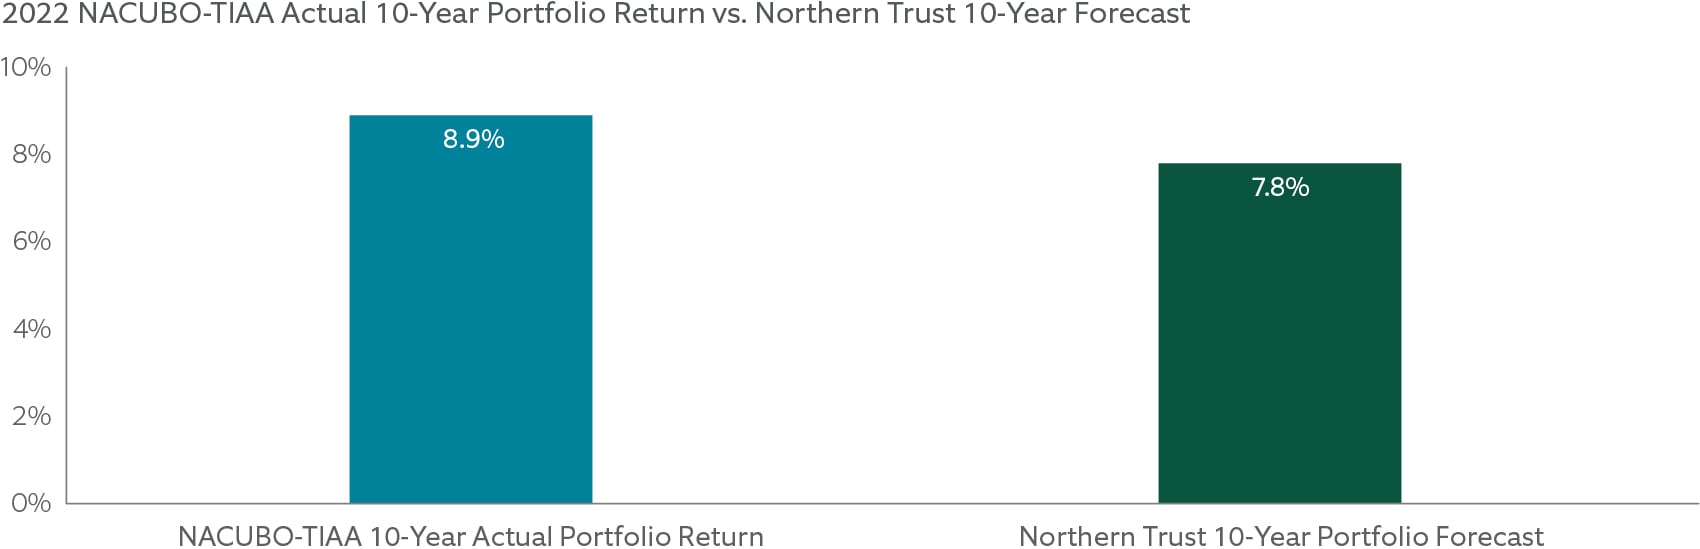 2022 NACUBO-TIAA Actual 10-Year Portfolio Return vs. NT 10-Year Forecast